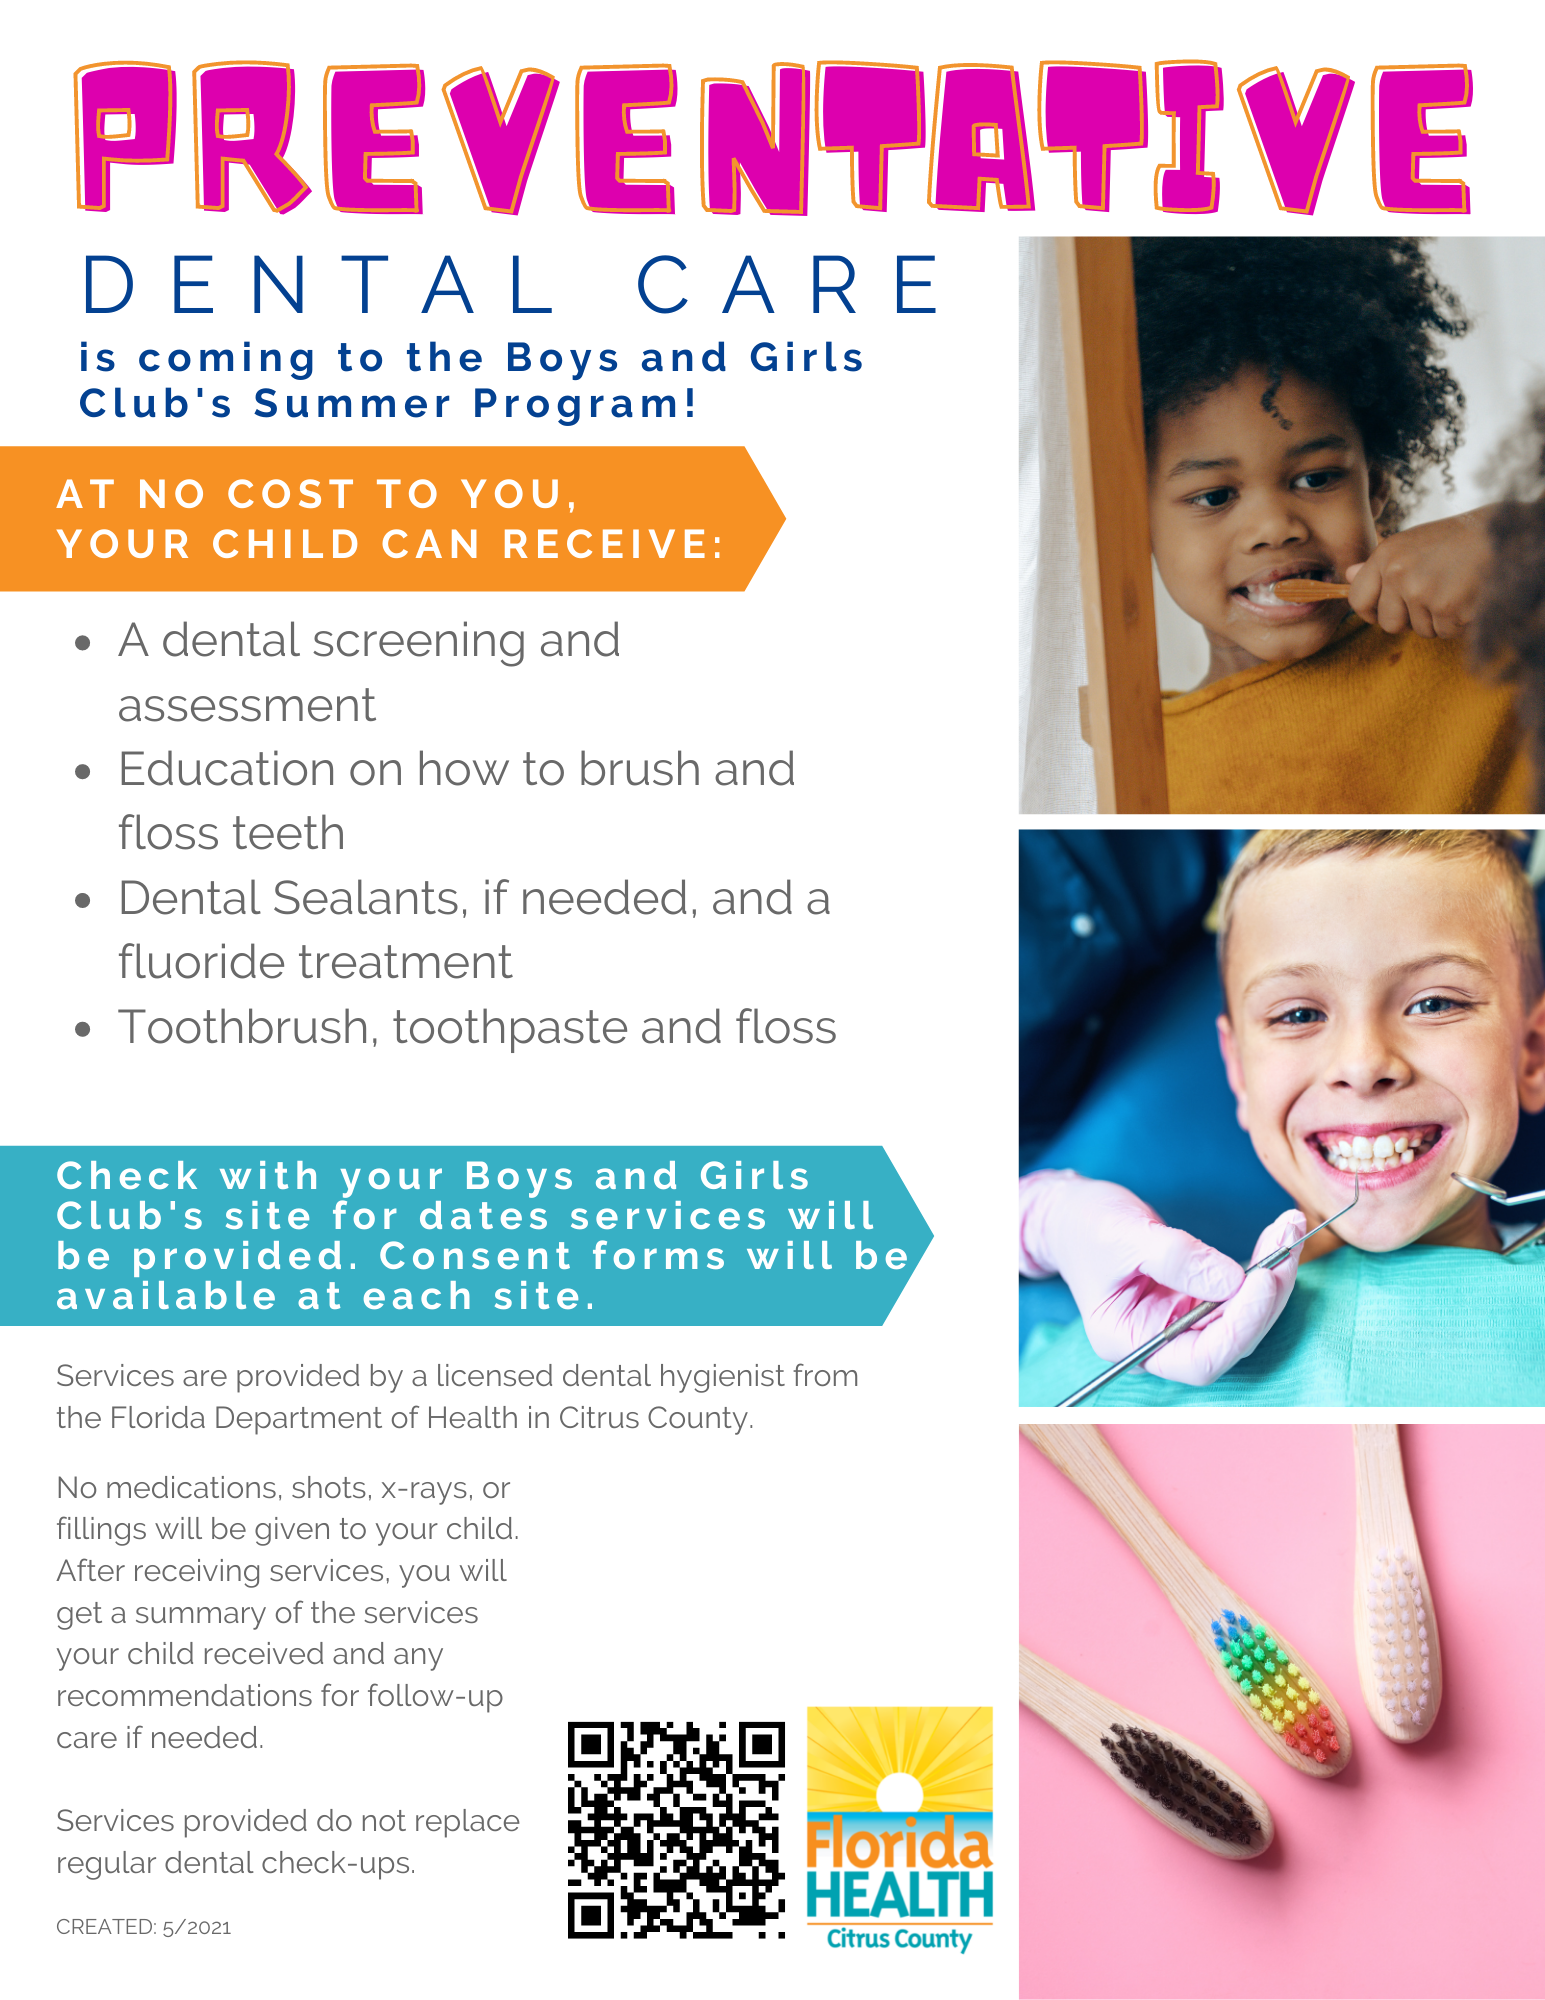 Preventative Dental Care Flyer for Boys and Girls Club Summer Program